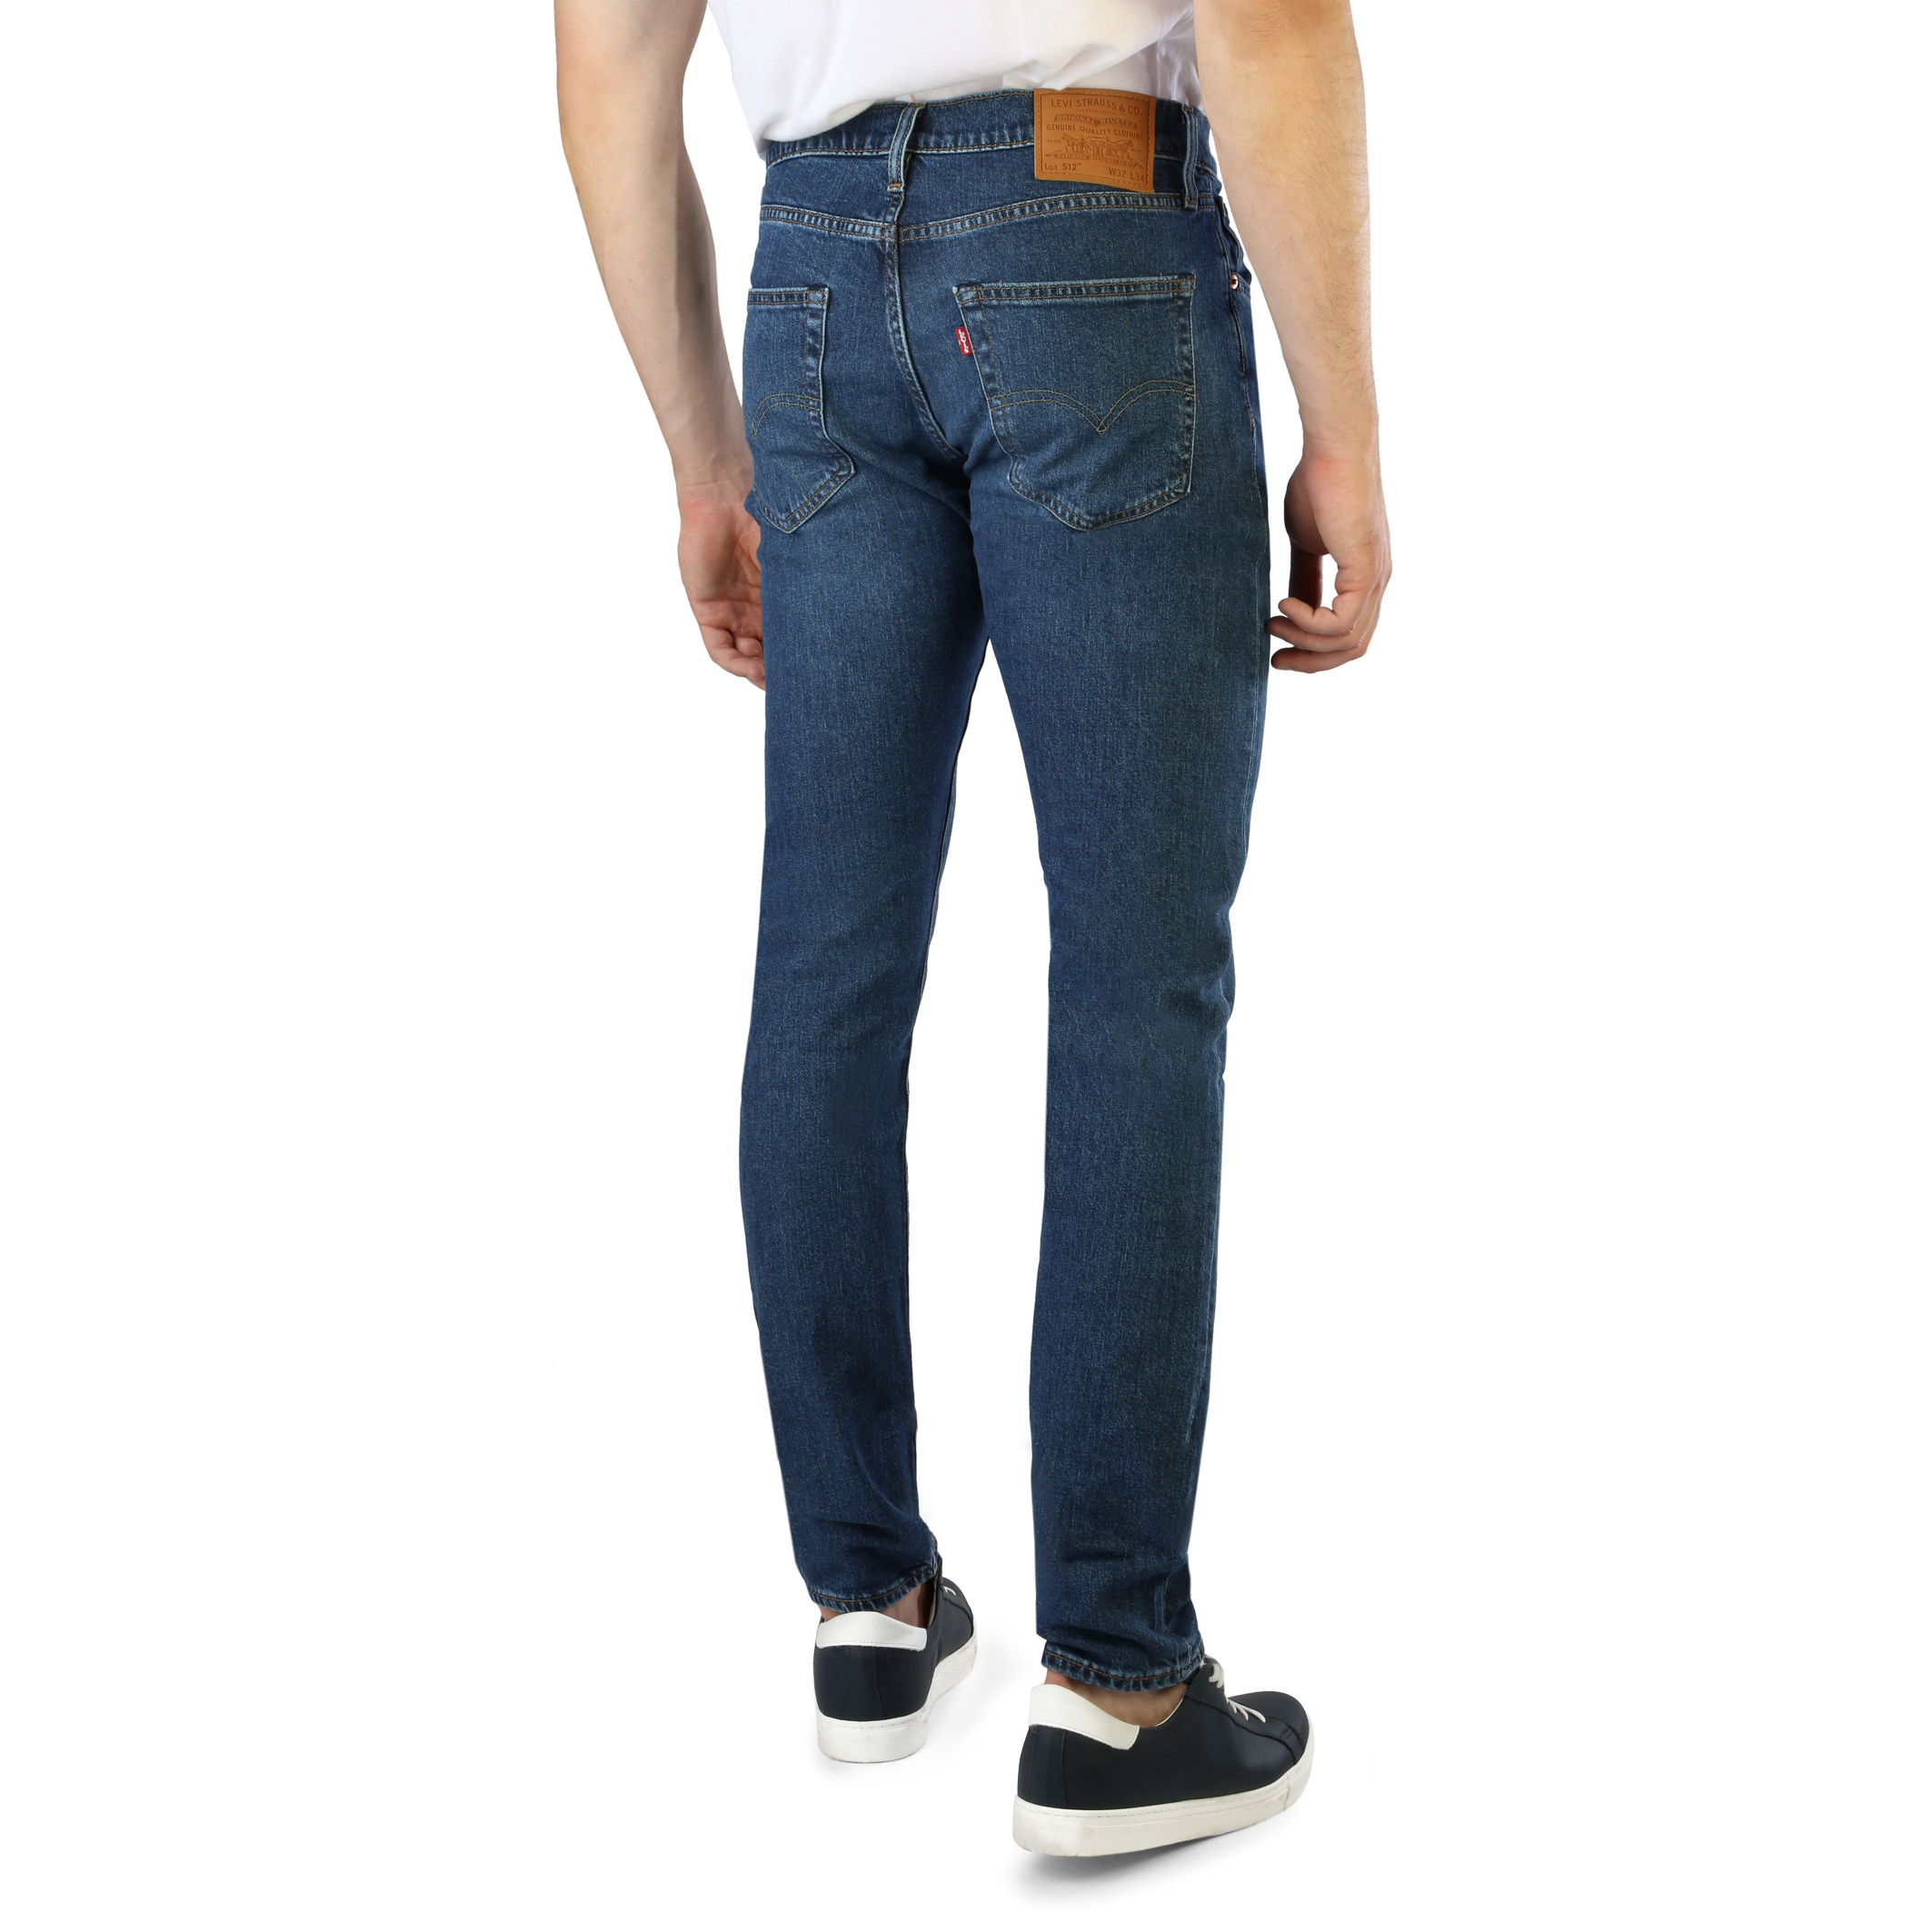 Levi's Blue Jeans for Men - 512-SLIM